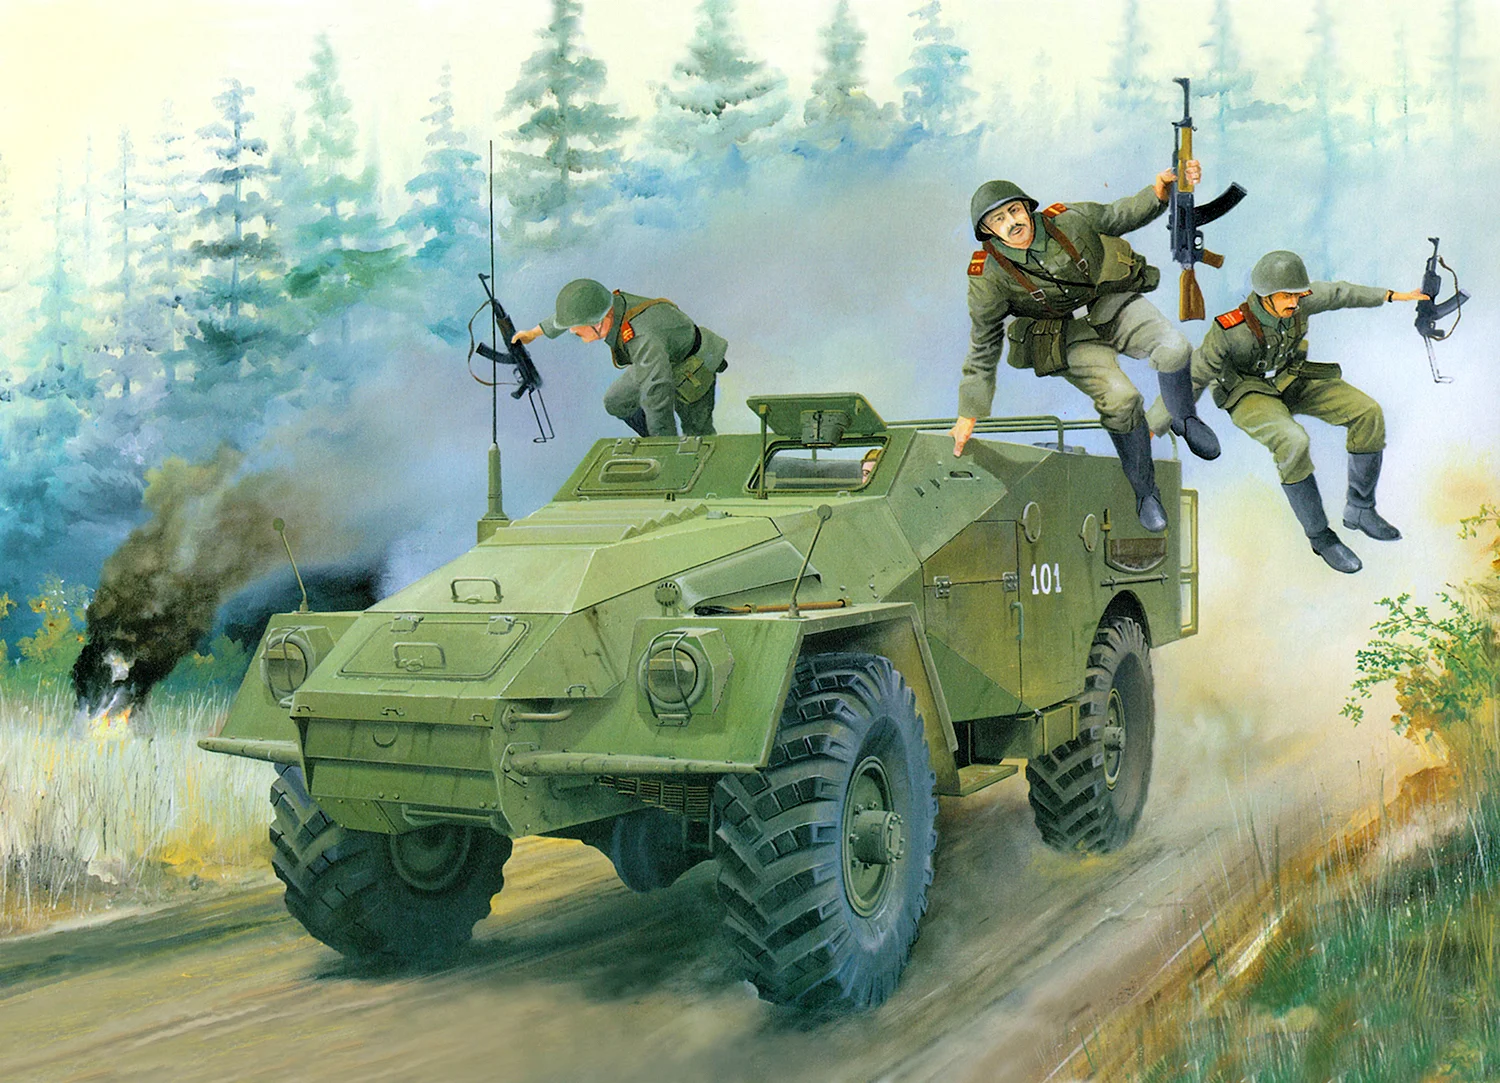 05517 Trumpeter 1/35 Советский БТР-40 BTR-40 APC